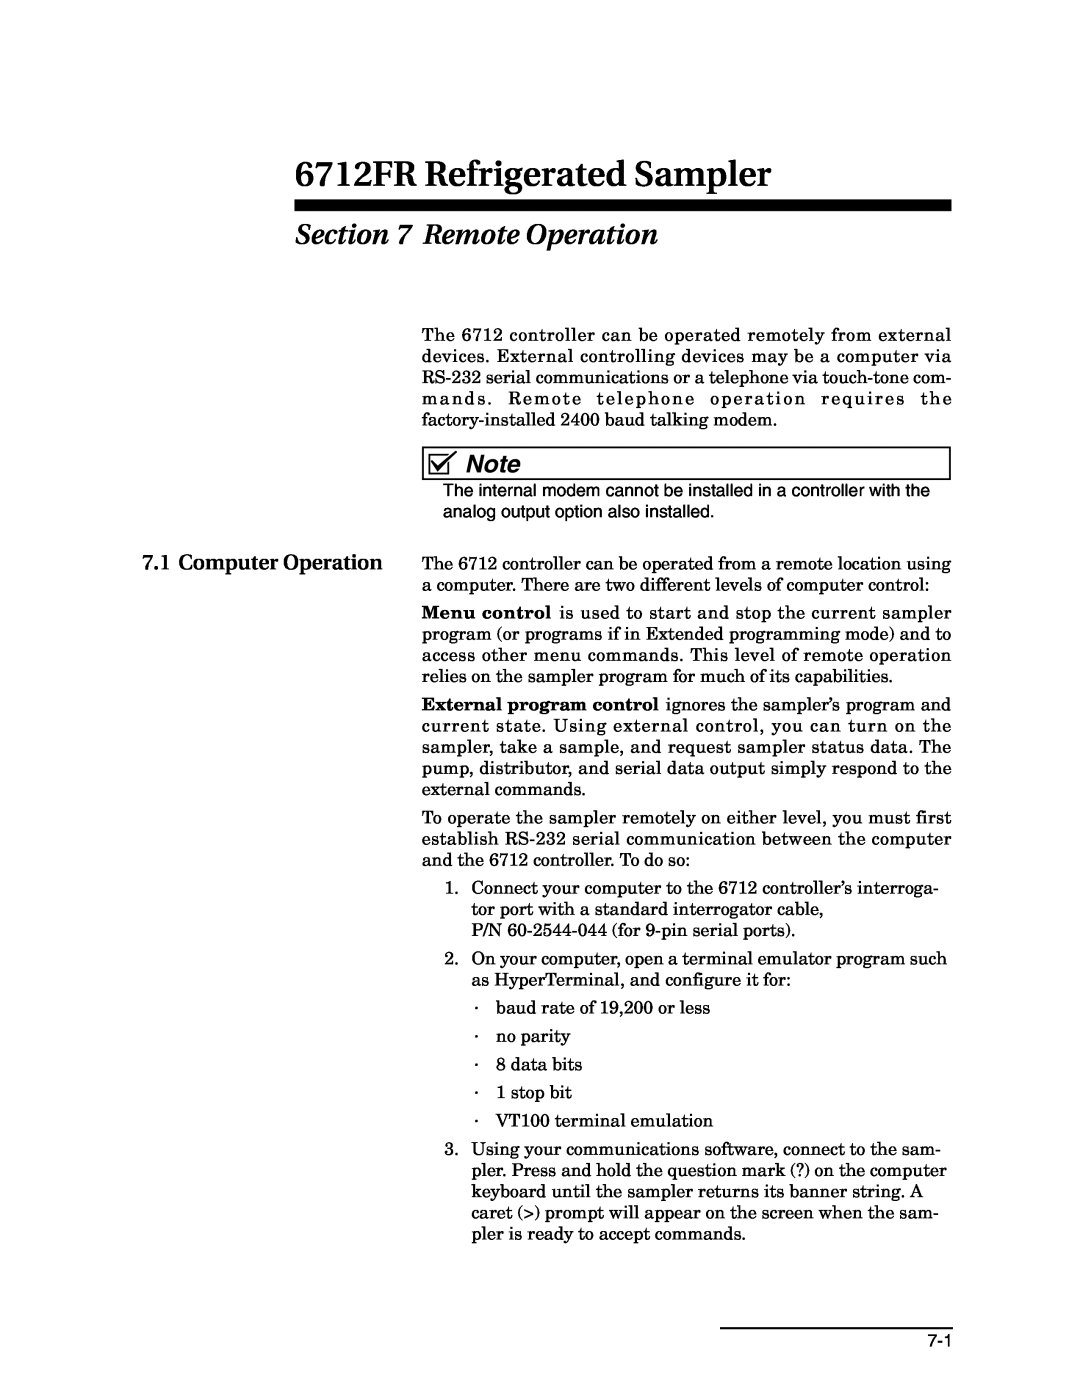 Teledyne manual Remote Operation, 6712FR Refrigerated Sampler 